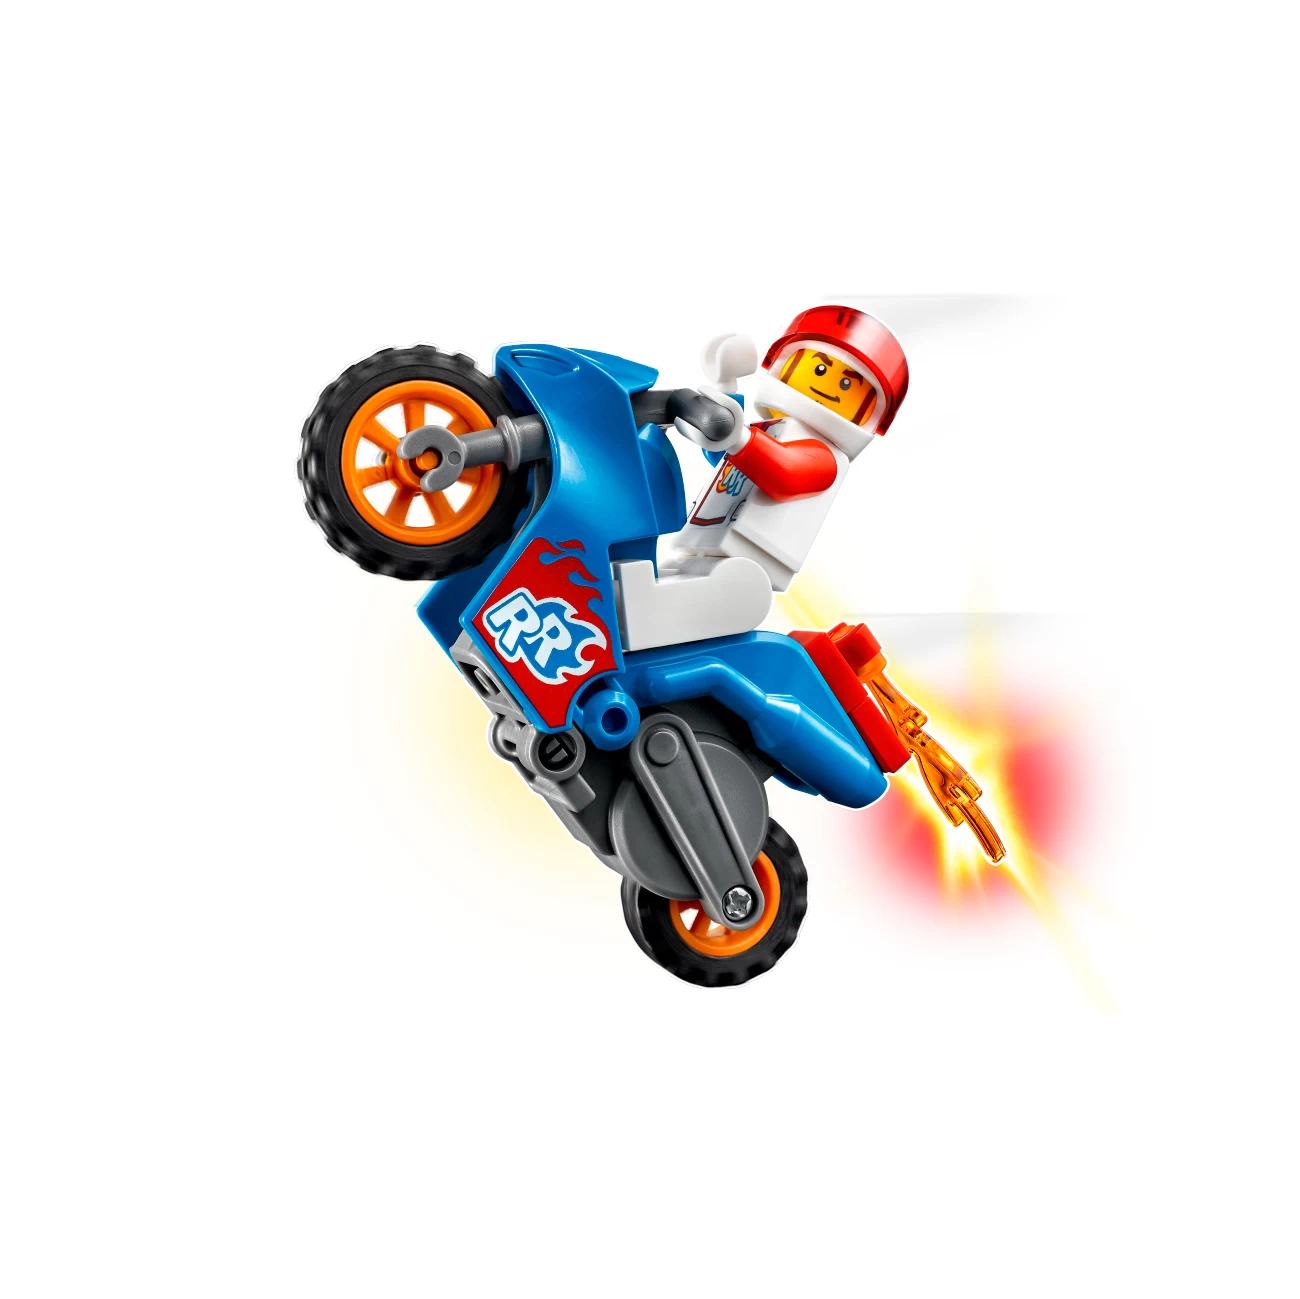 LEGO City 60298 - Raketen-Stuntbike